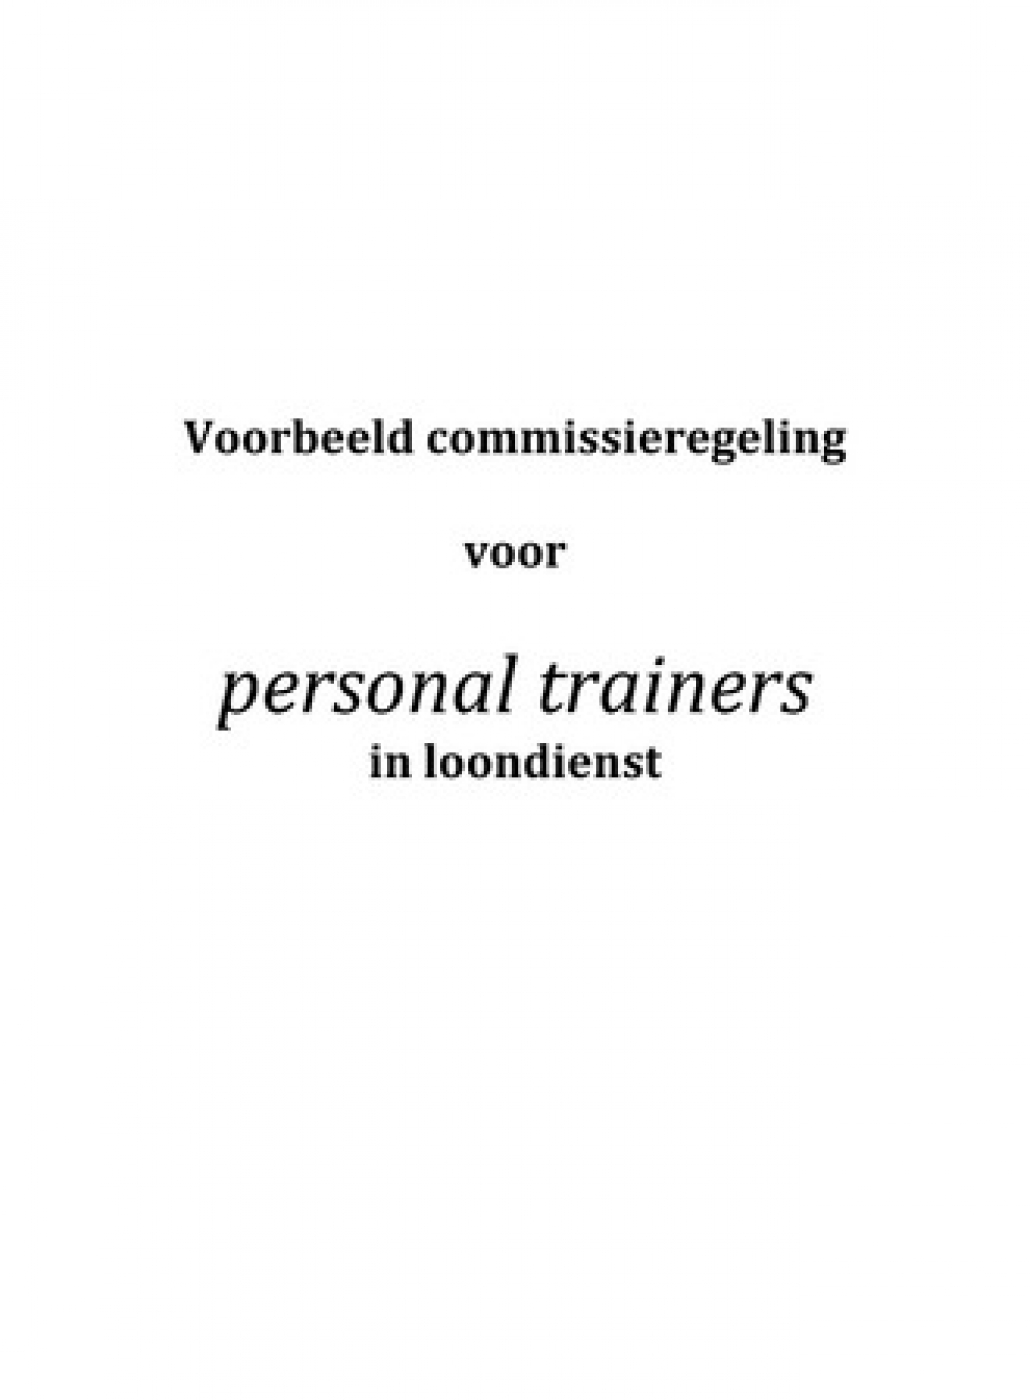 Commissie regeling voor personal trainers 